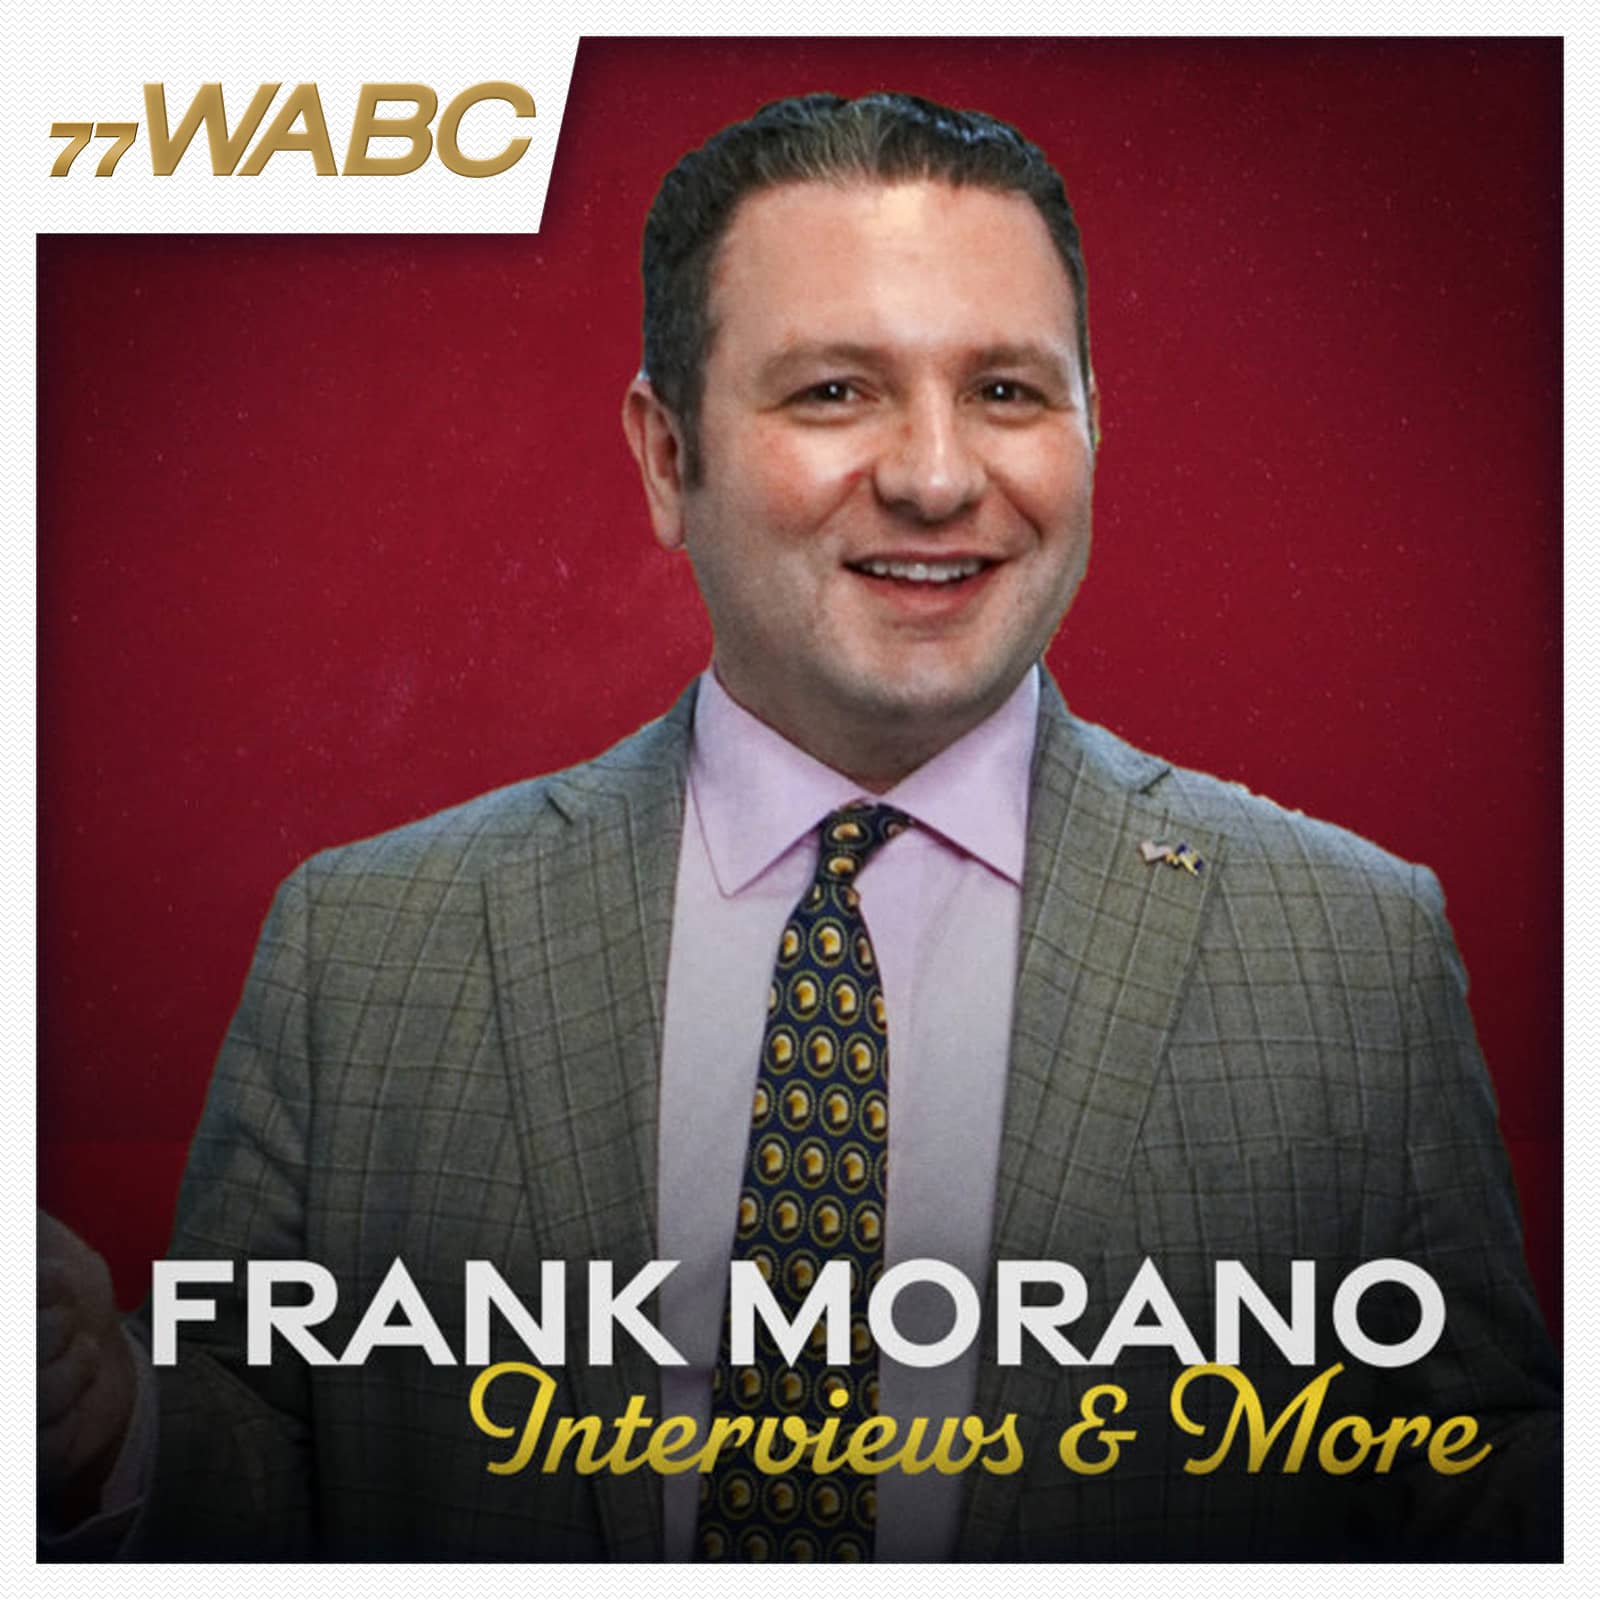 frank-morano-interviews-and-more-podcast-new-logo-255